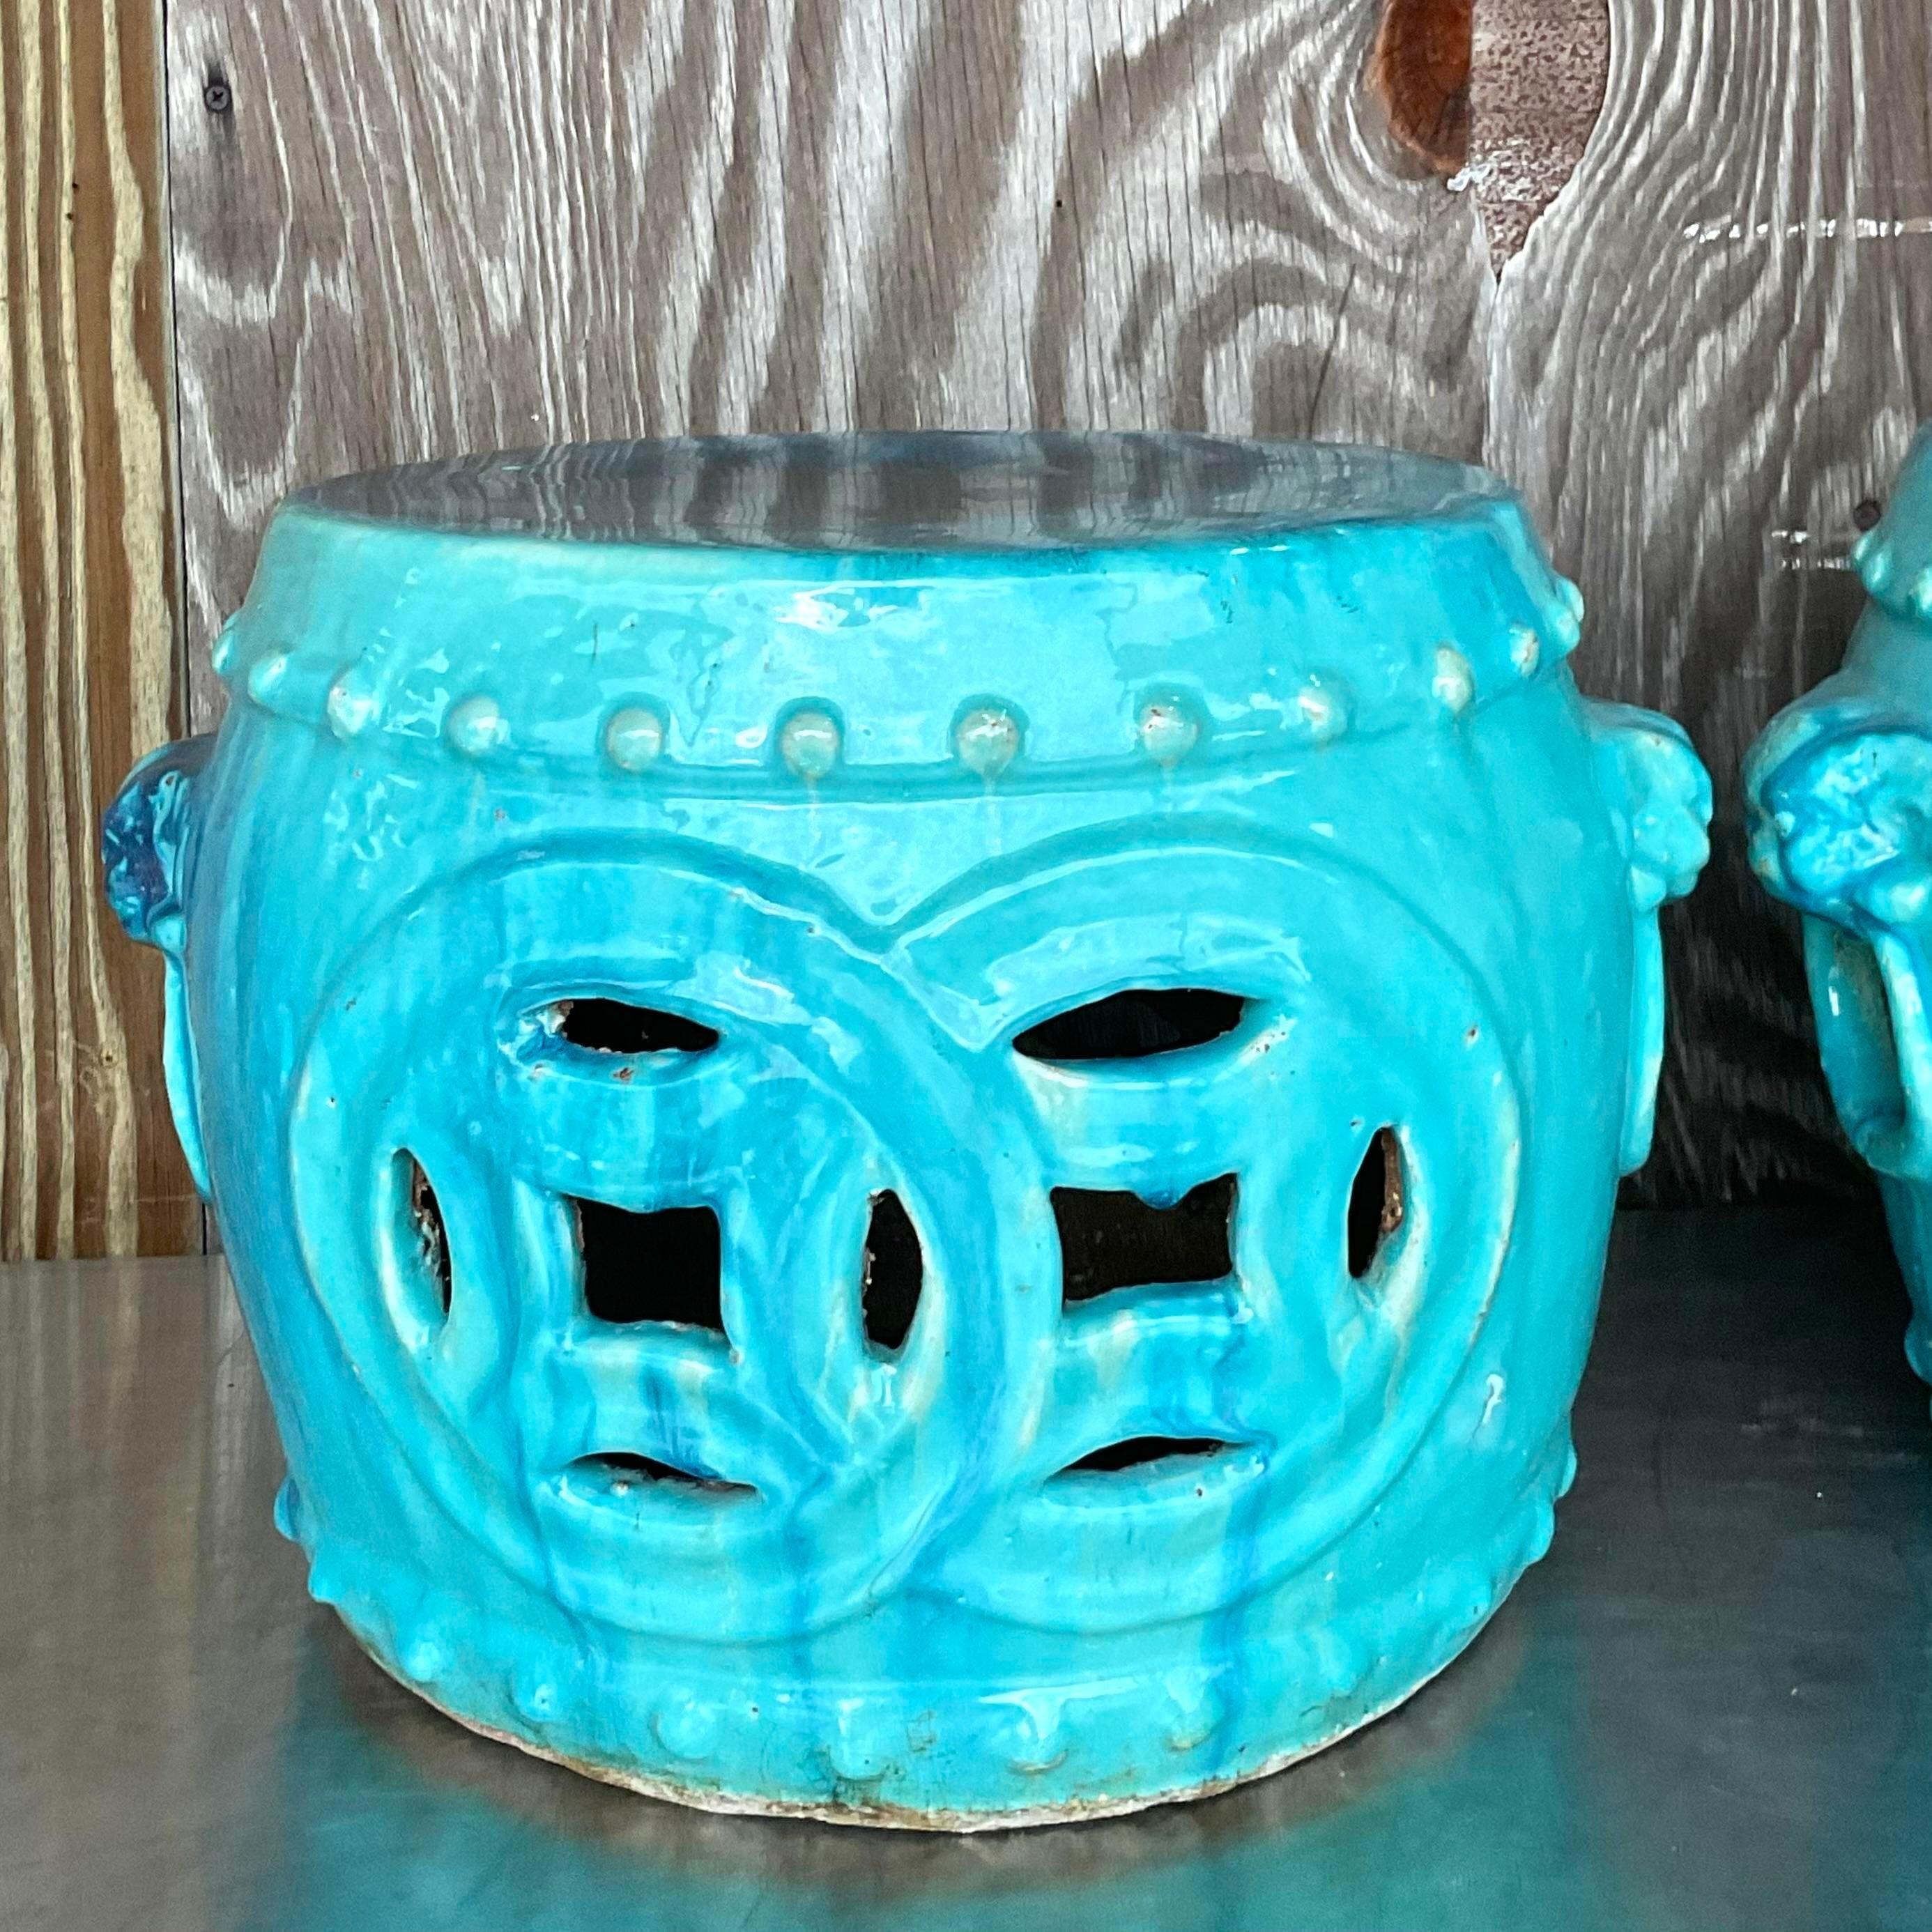 20th Century Vintage Boho Glazed Ceramic Low Stools - a Pair For Sale